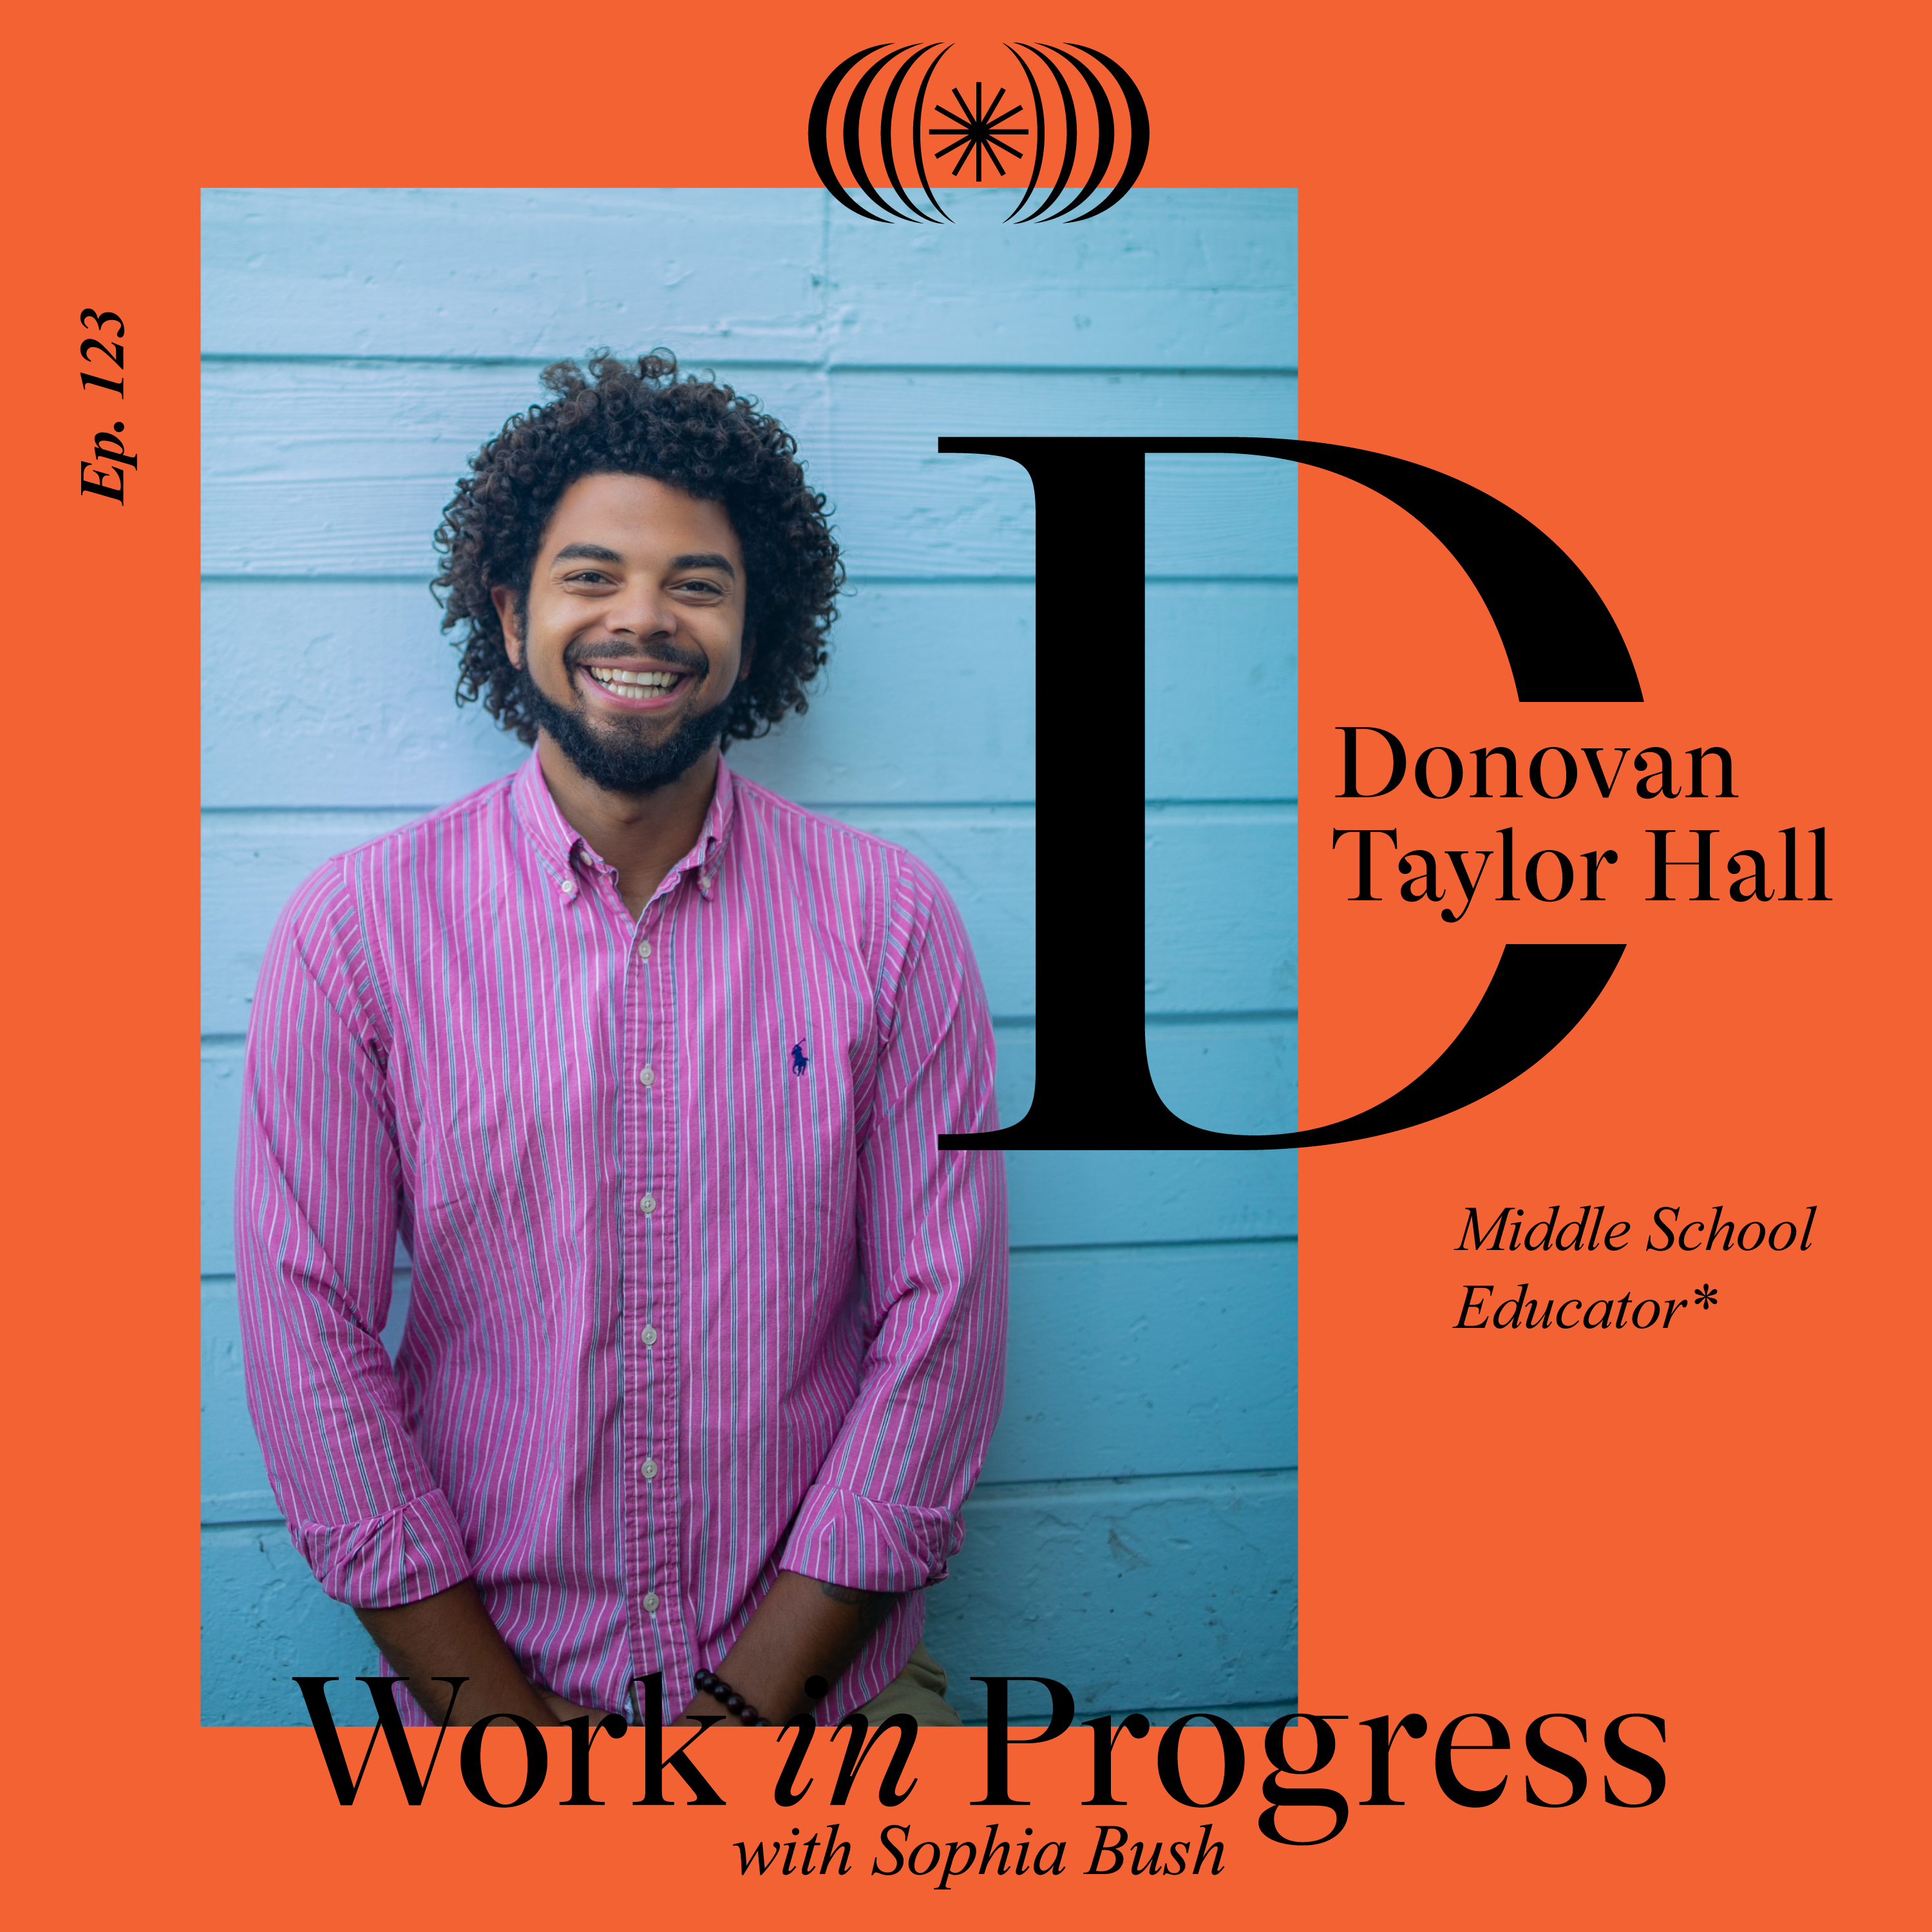 Donovan Taylor Hall